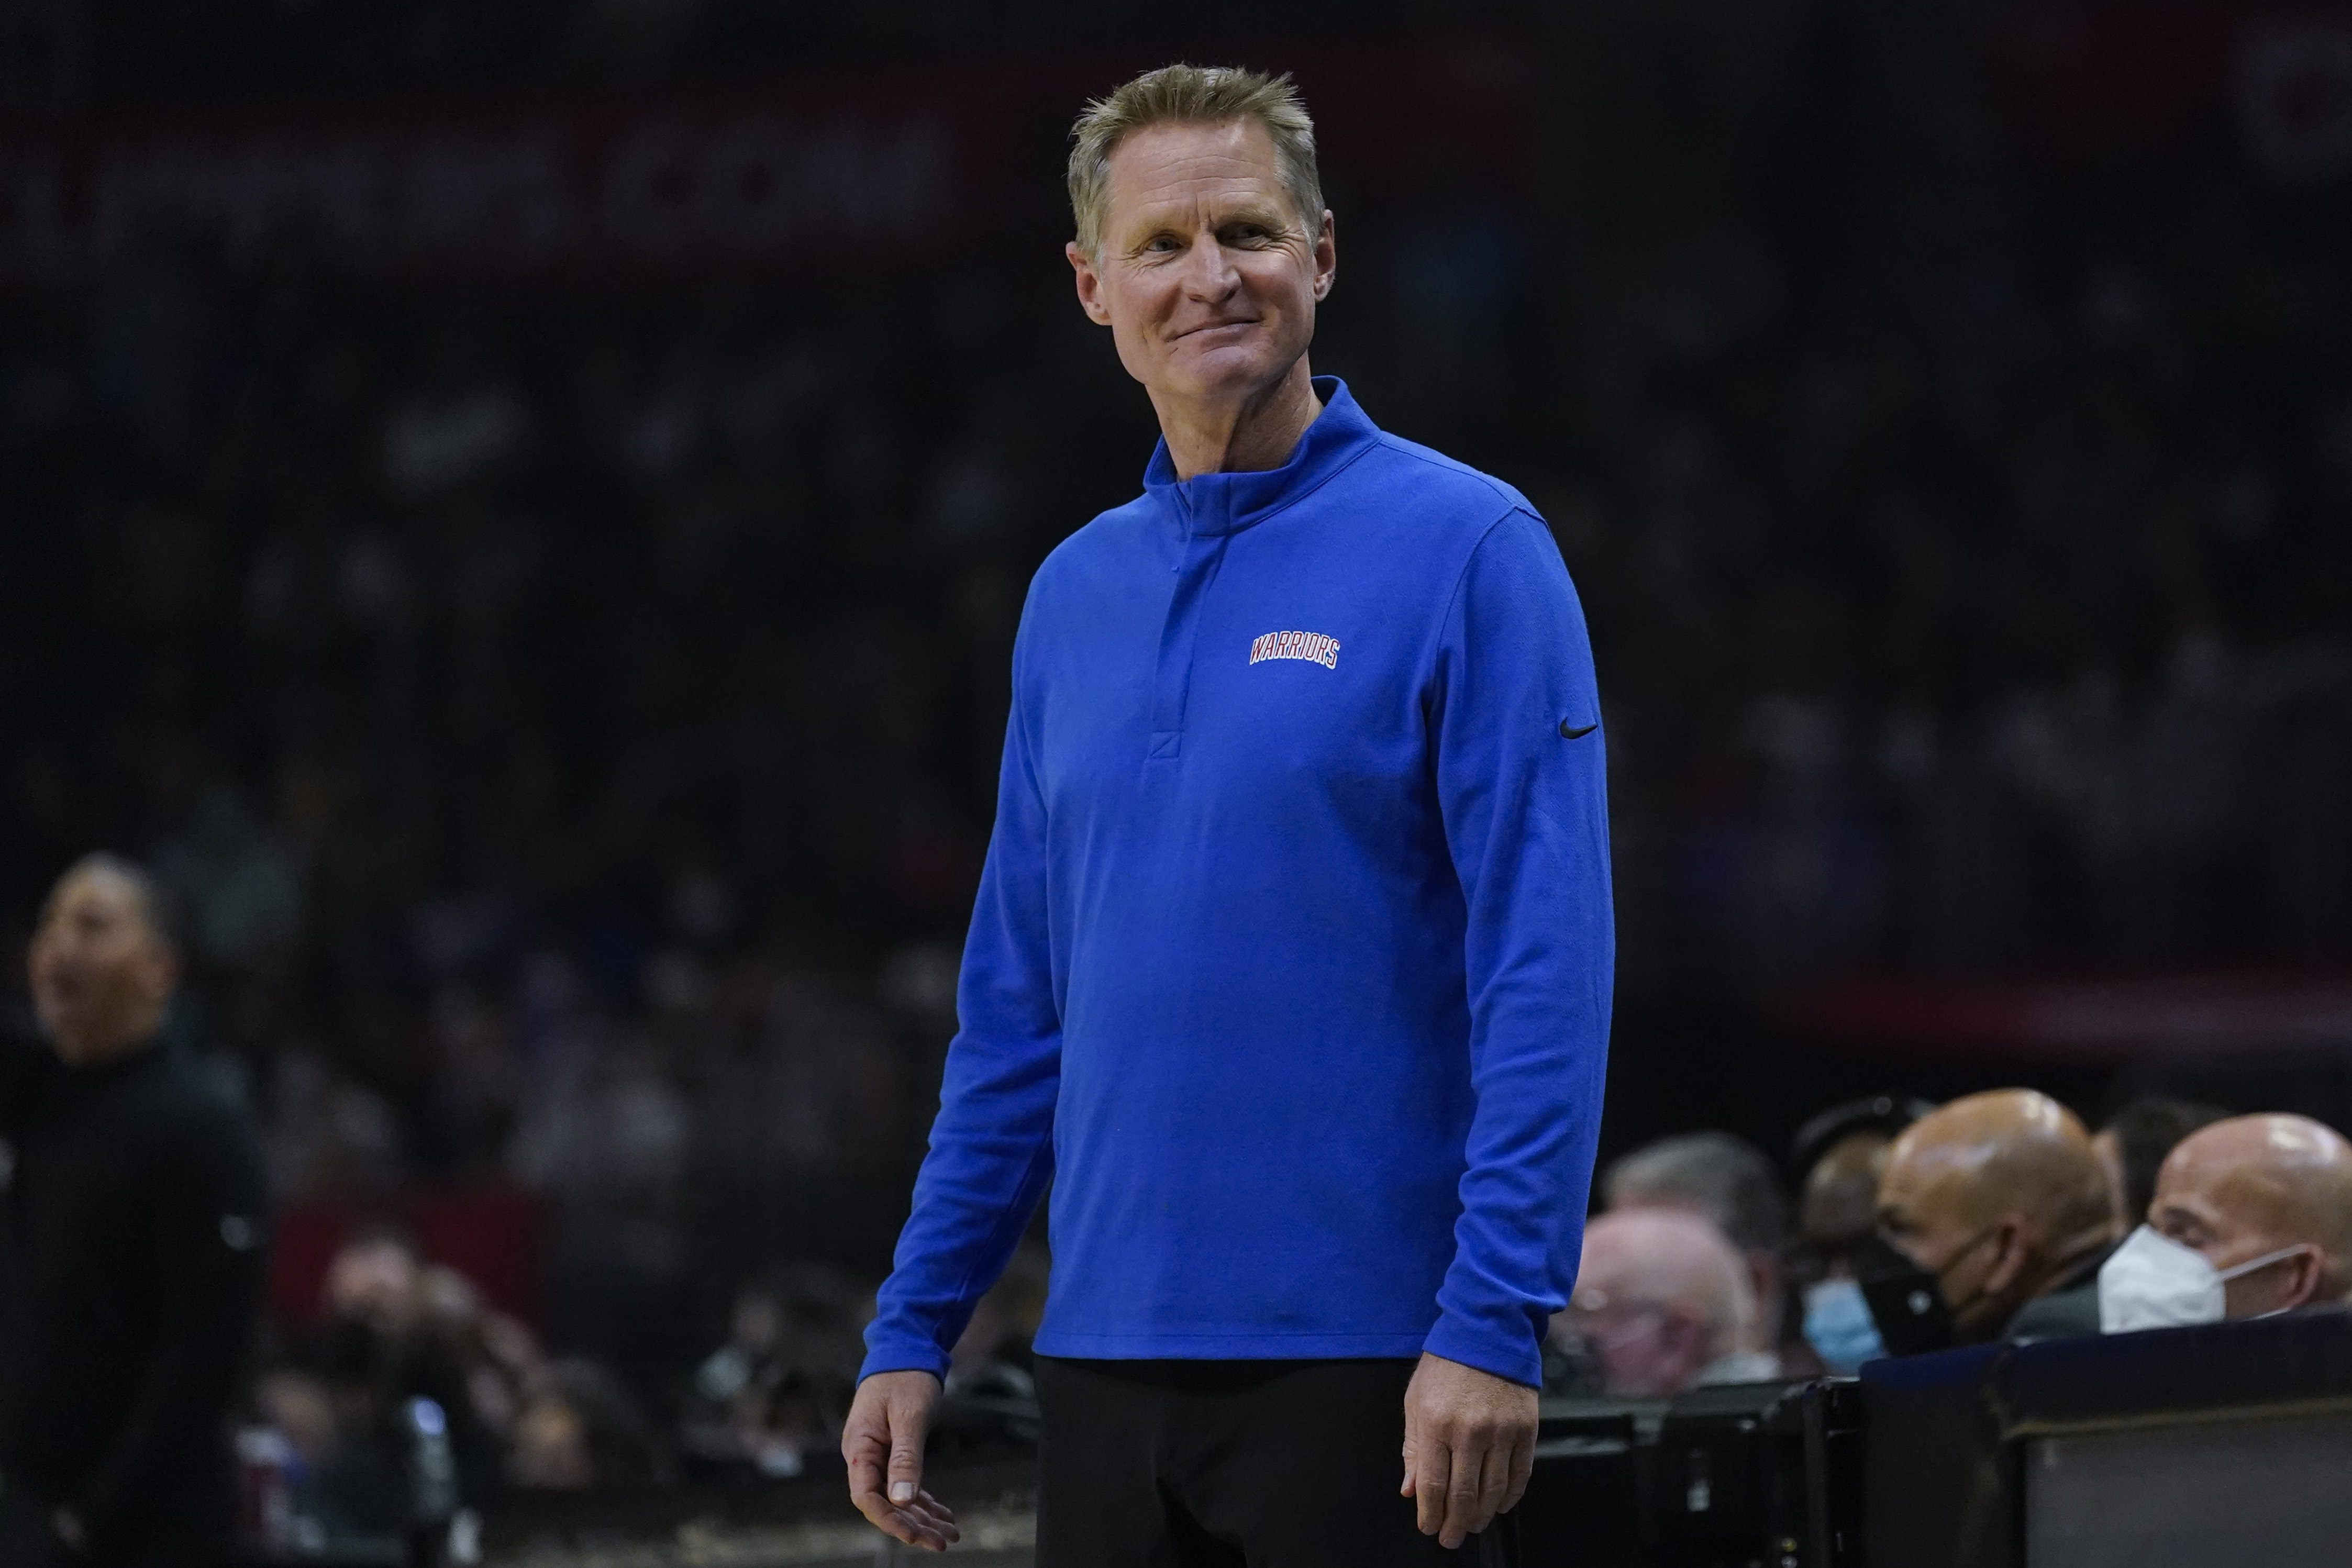 Woj: Steve Kerr to Replace Gregg Popovich as Team USA Men's Basketball Coach